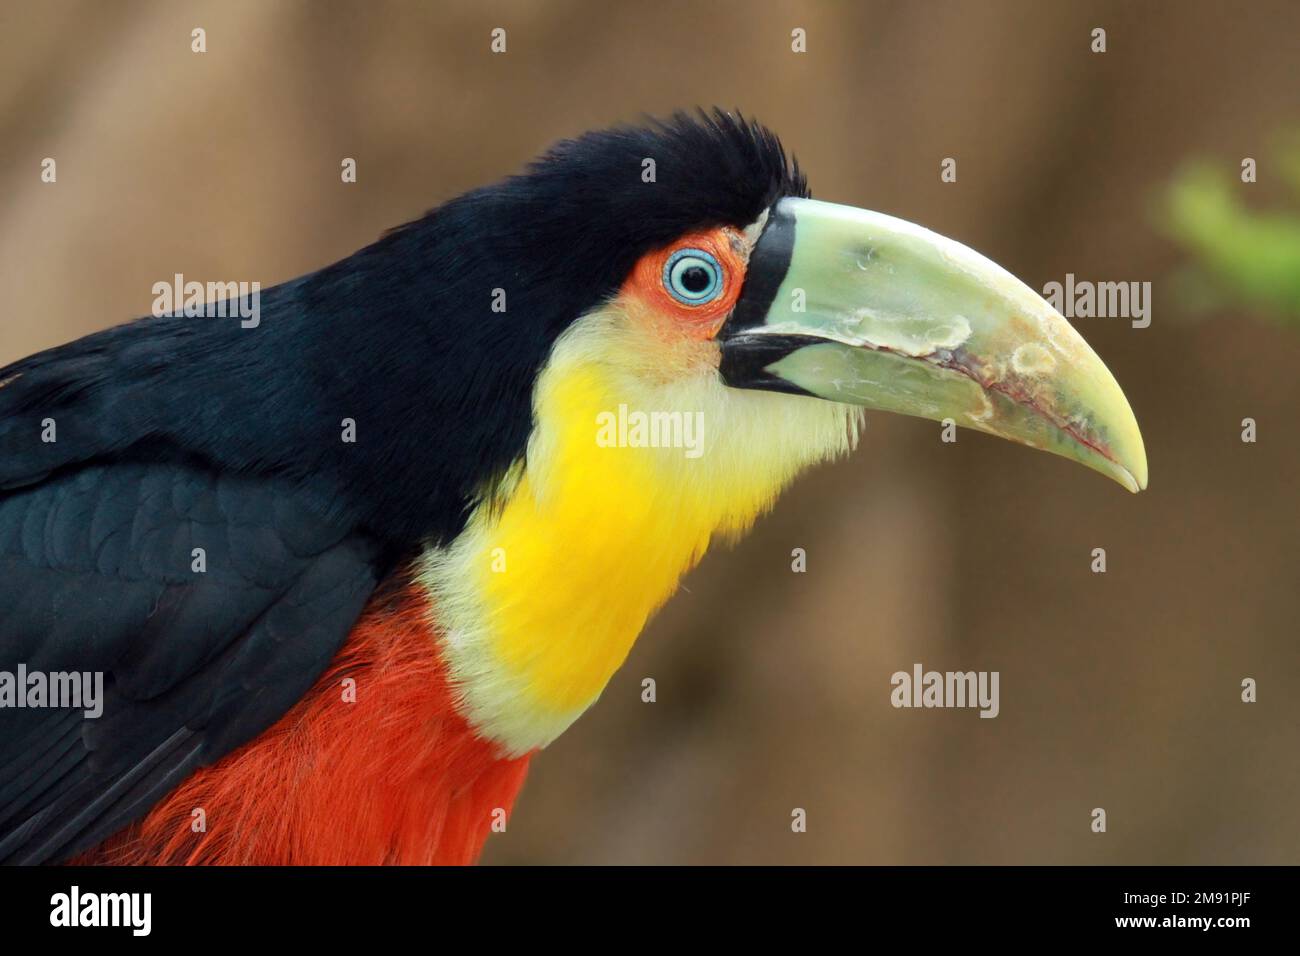 Green-billed toucan (Ramphastos dicolorus) portrait Stock Photo